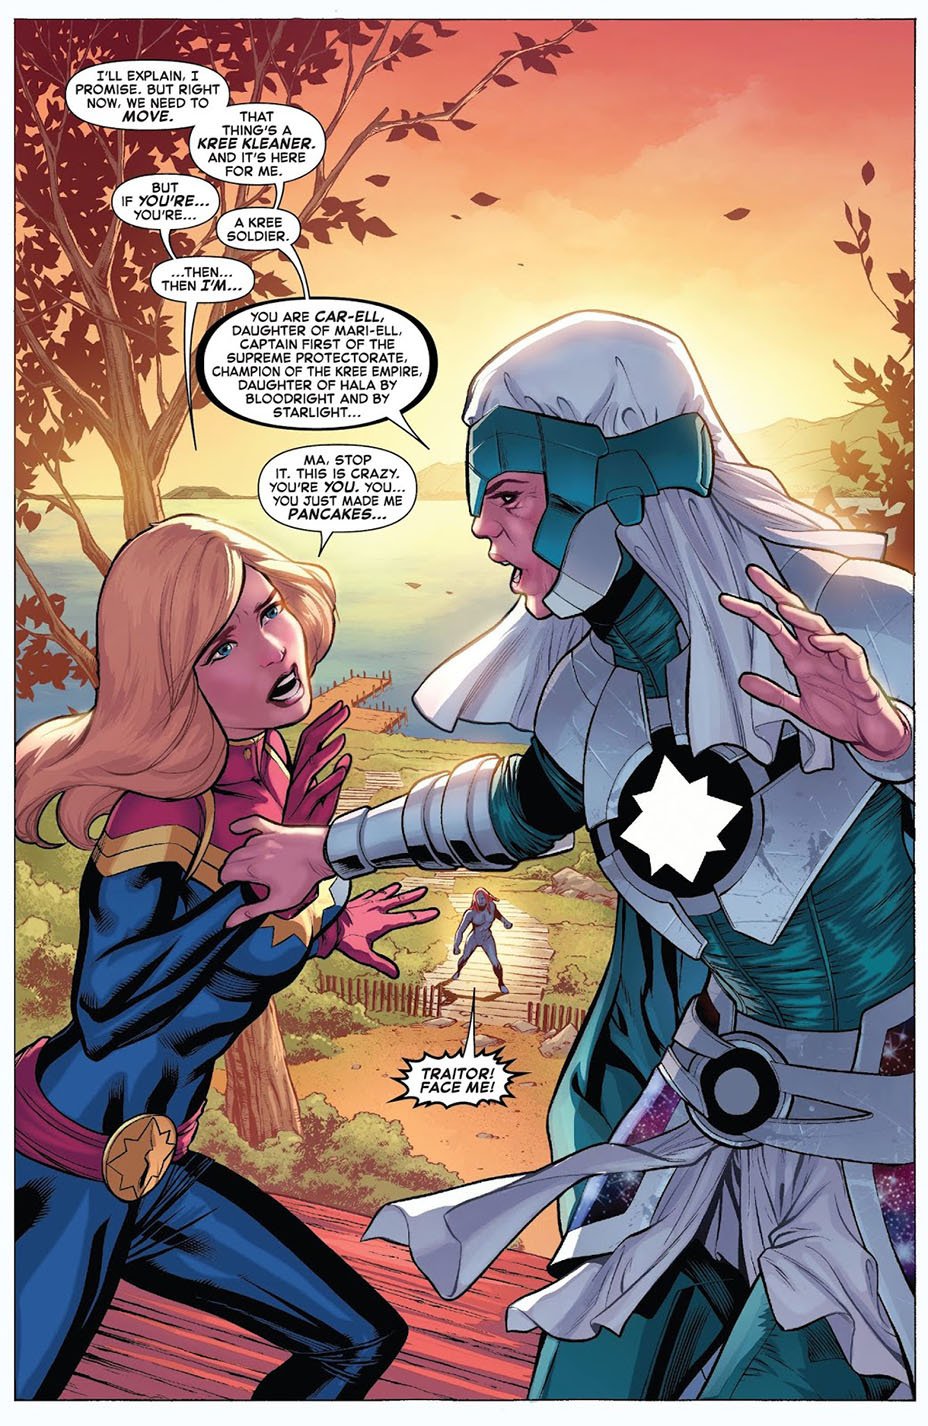 Pagina da The Life Of Captain Marvel #4